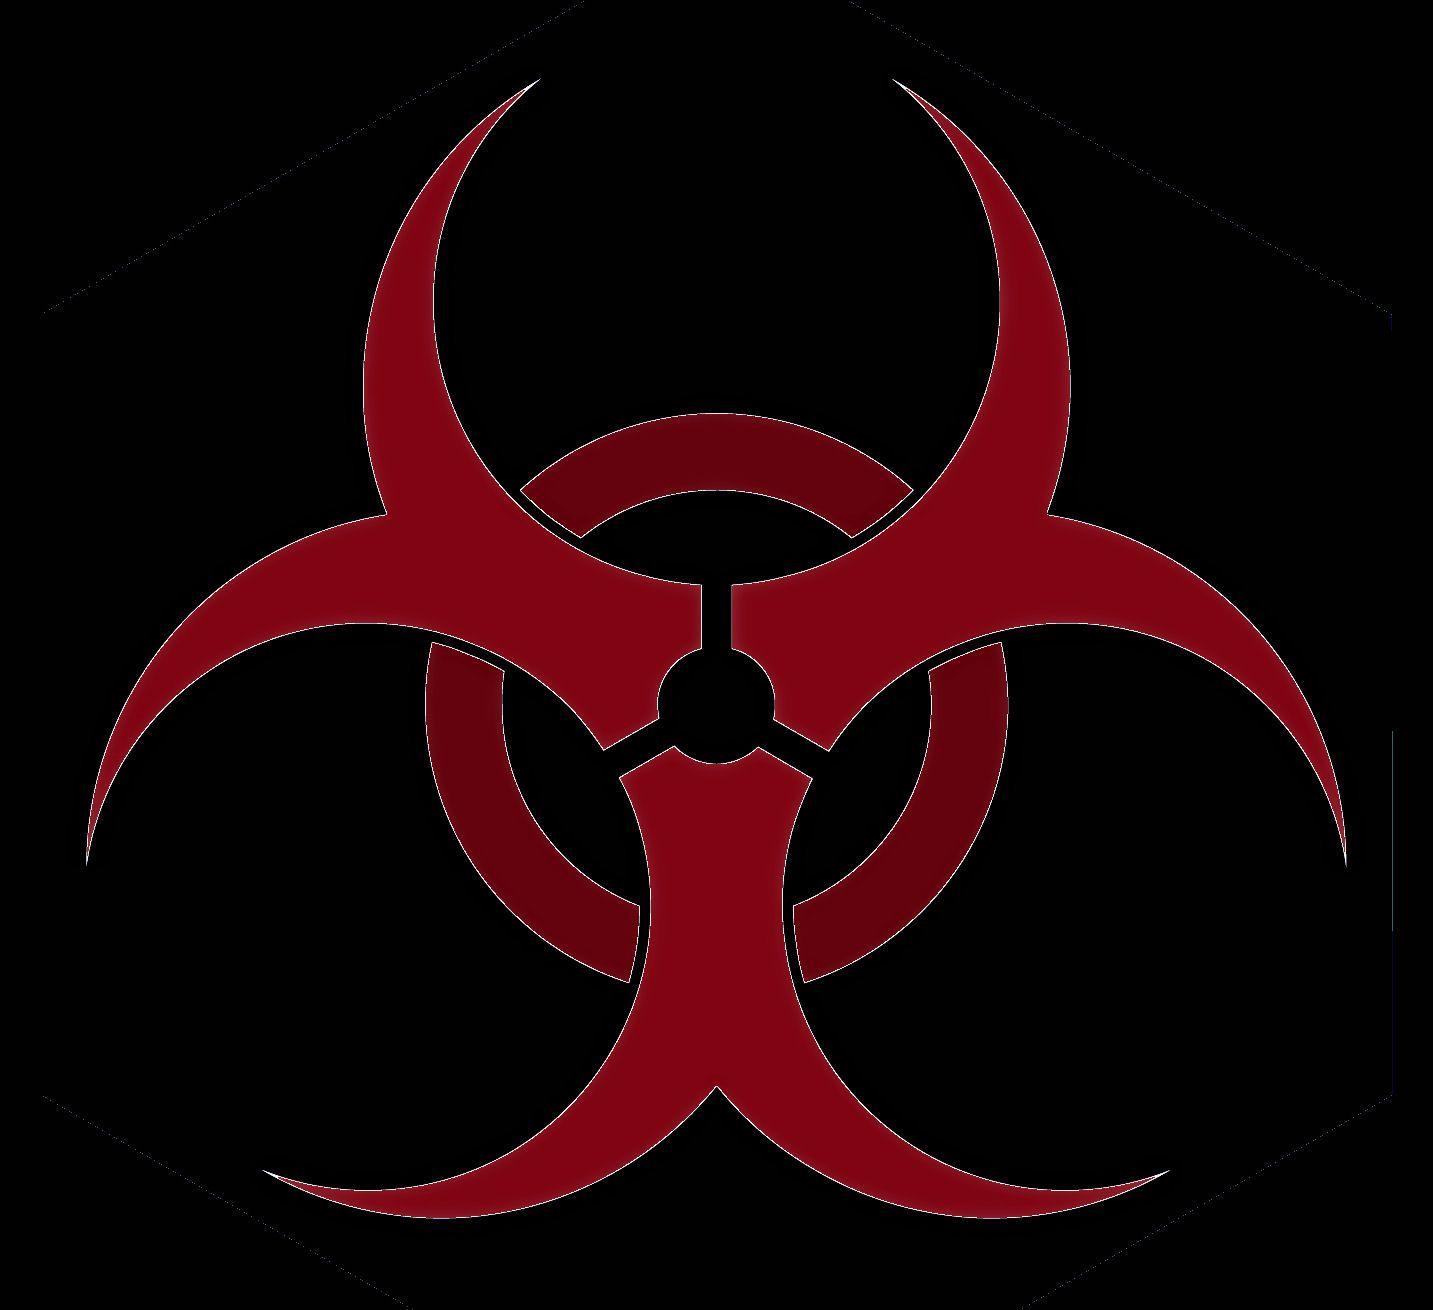 Wallpaper For > Red Biohazard Symbol Wallpaper